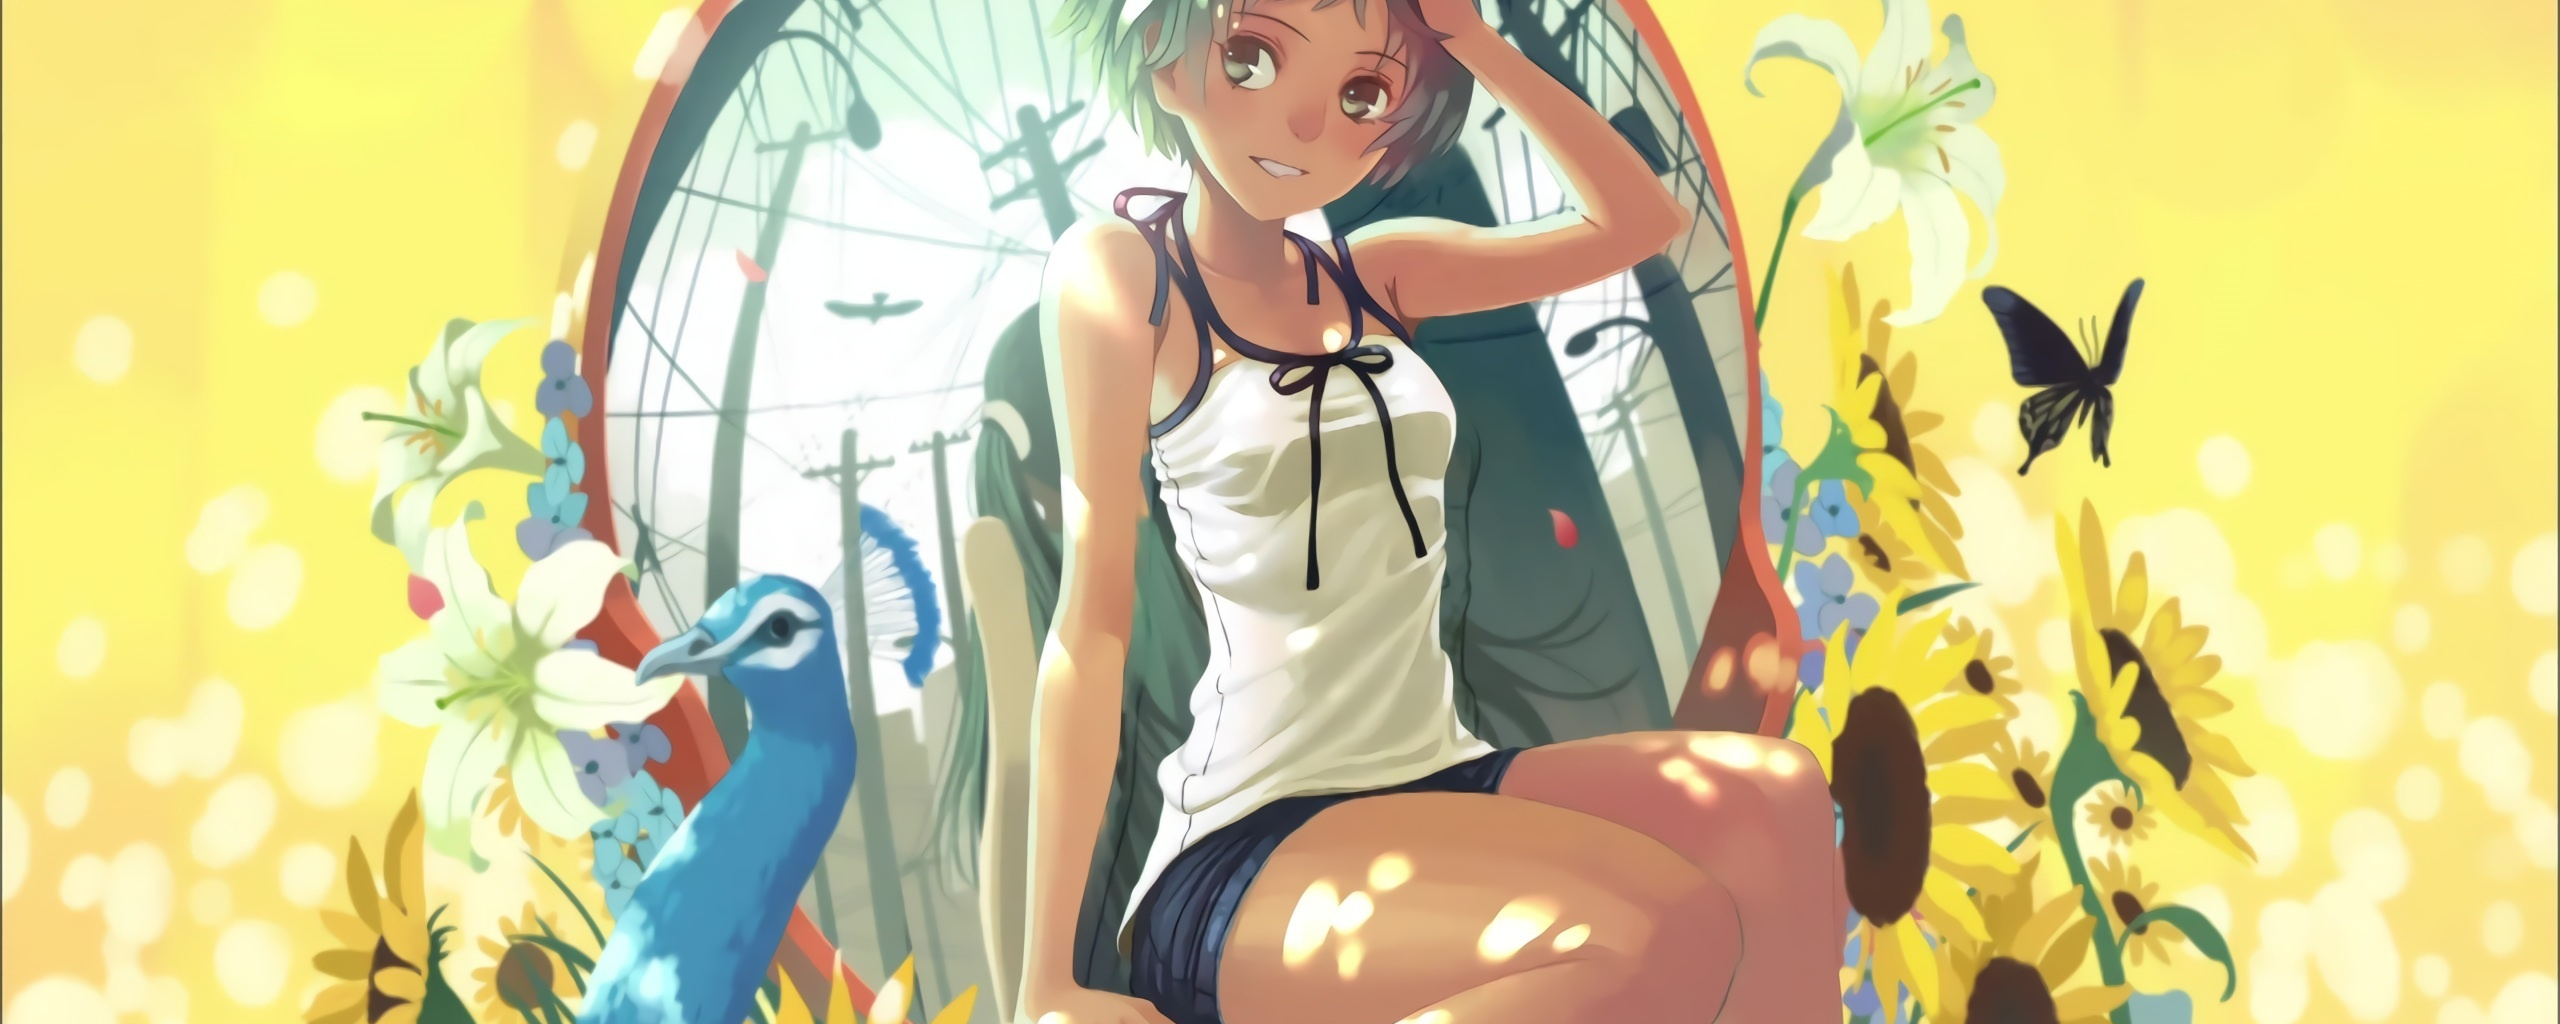 Download 2560x1024 Wallpaper Short Hair Anime Girl Monogatari Bakemonogatari Dual Wide Wide 21 9 Widescreen 2560x1024 Hd Image Background 4341